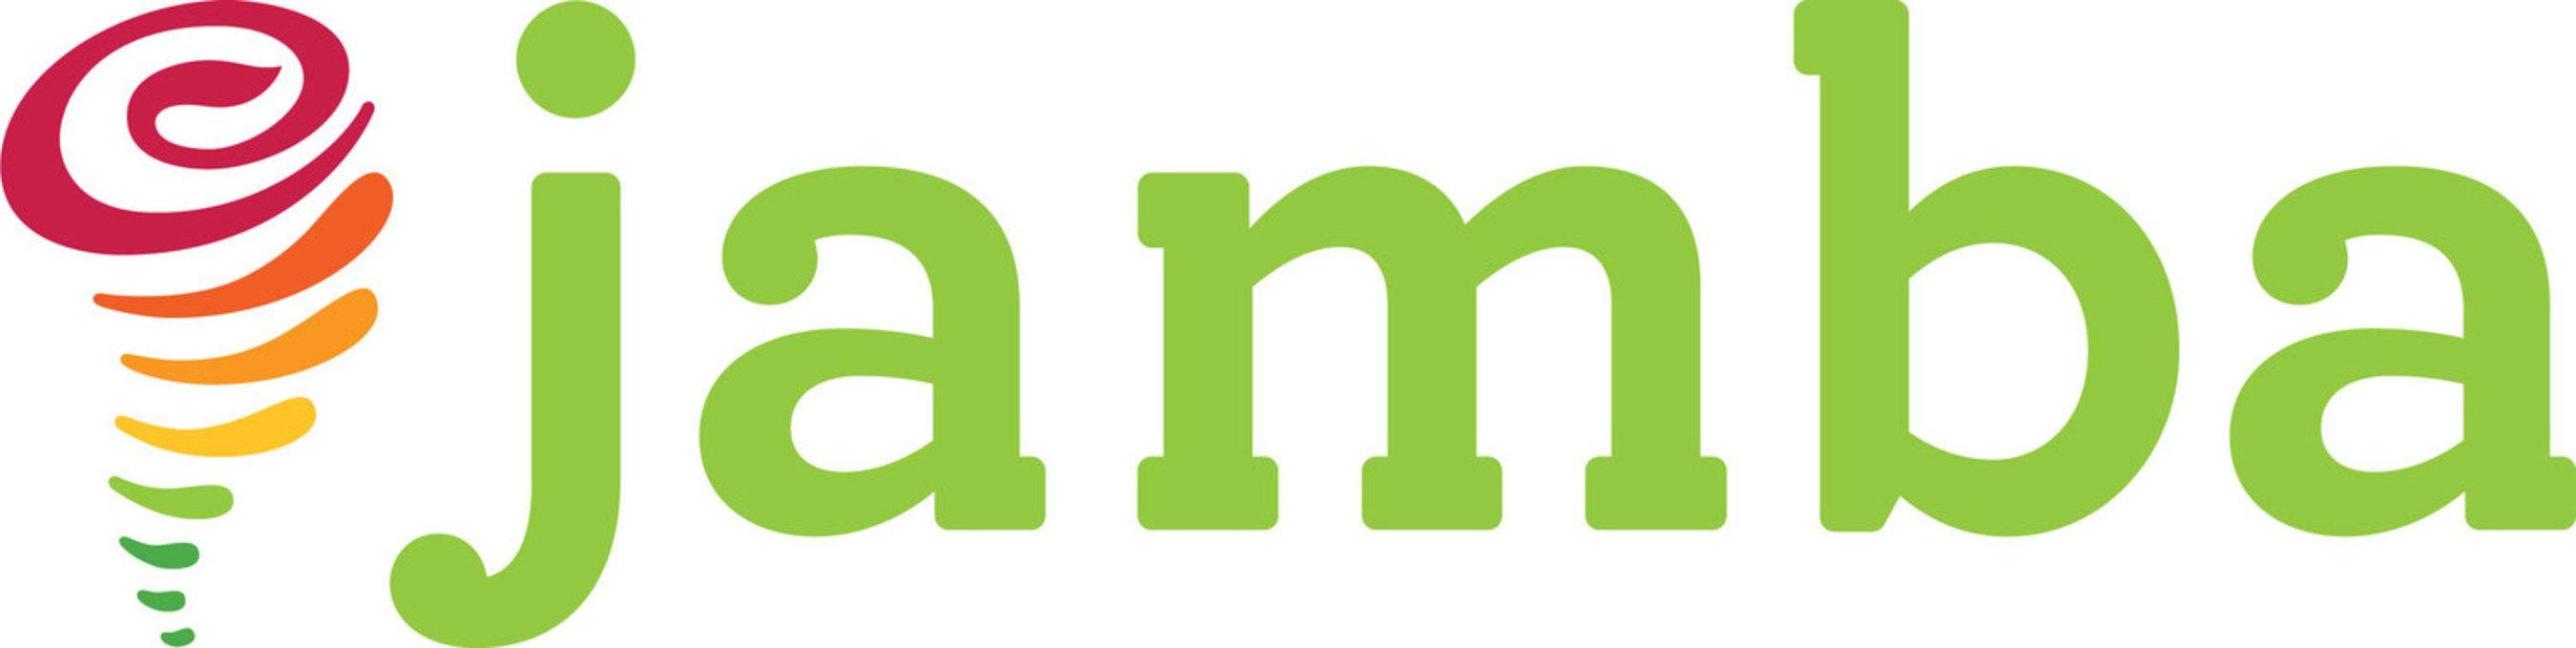 Jumba Juice Logo - Focus Brands announces completion of acquisition of Jamba Juice